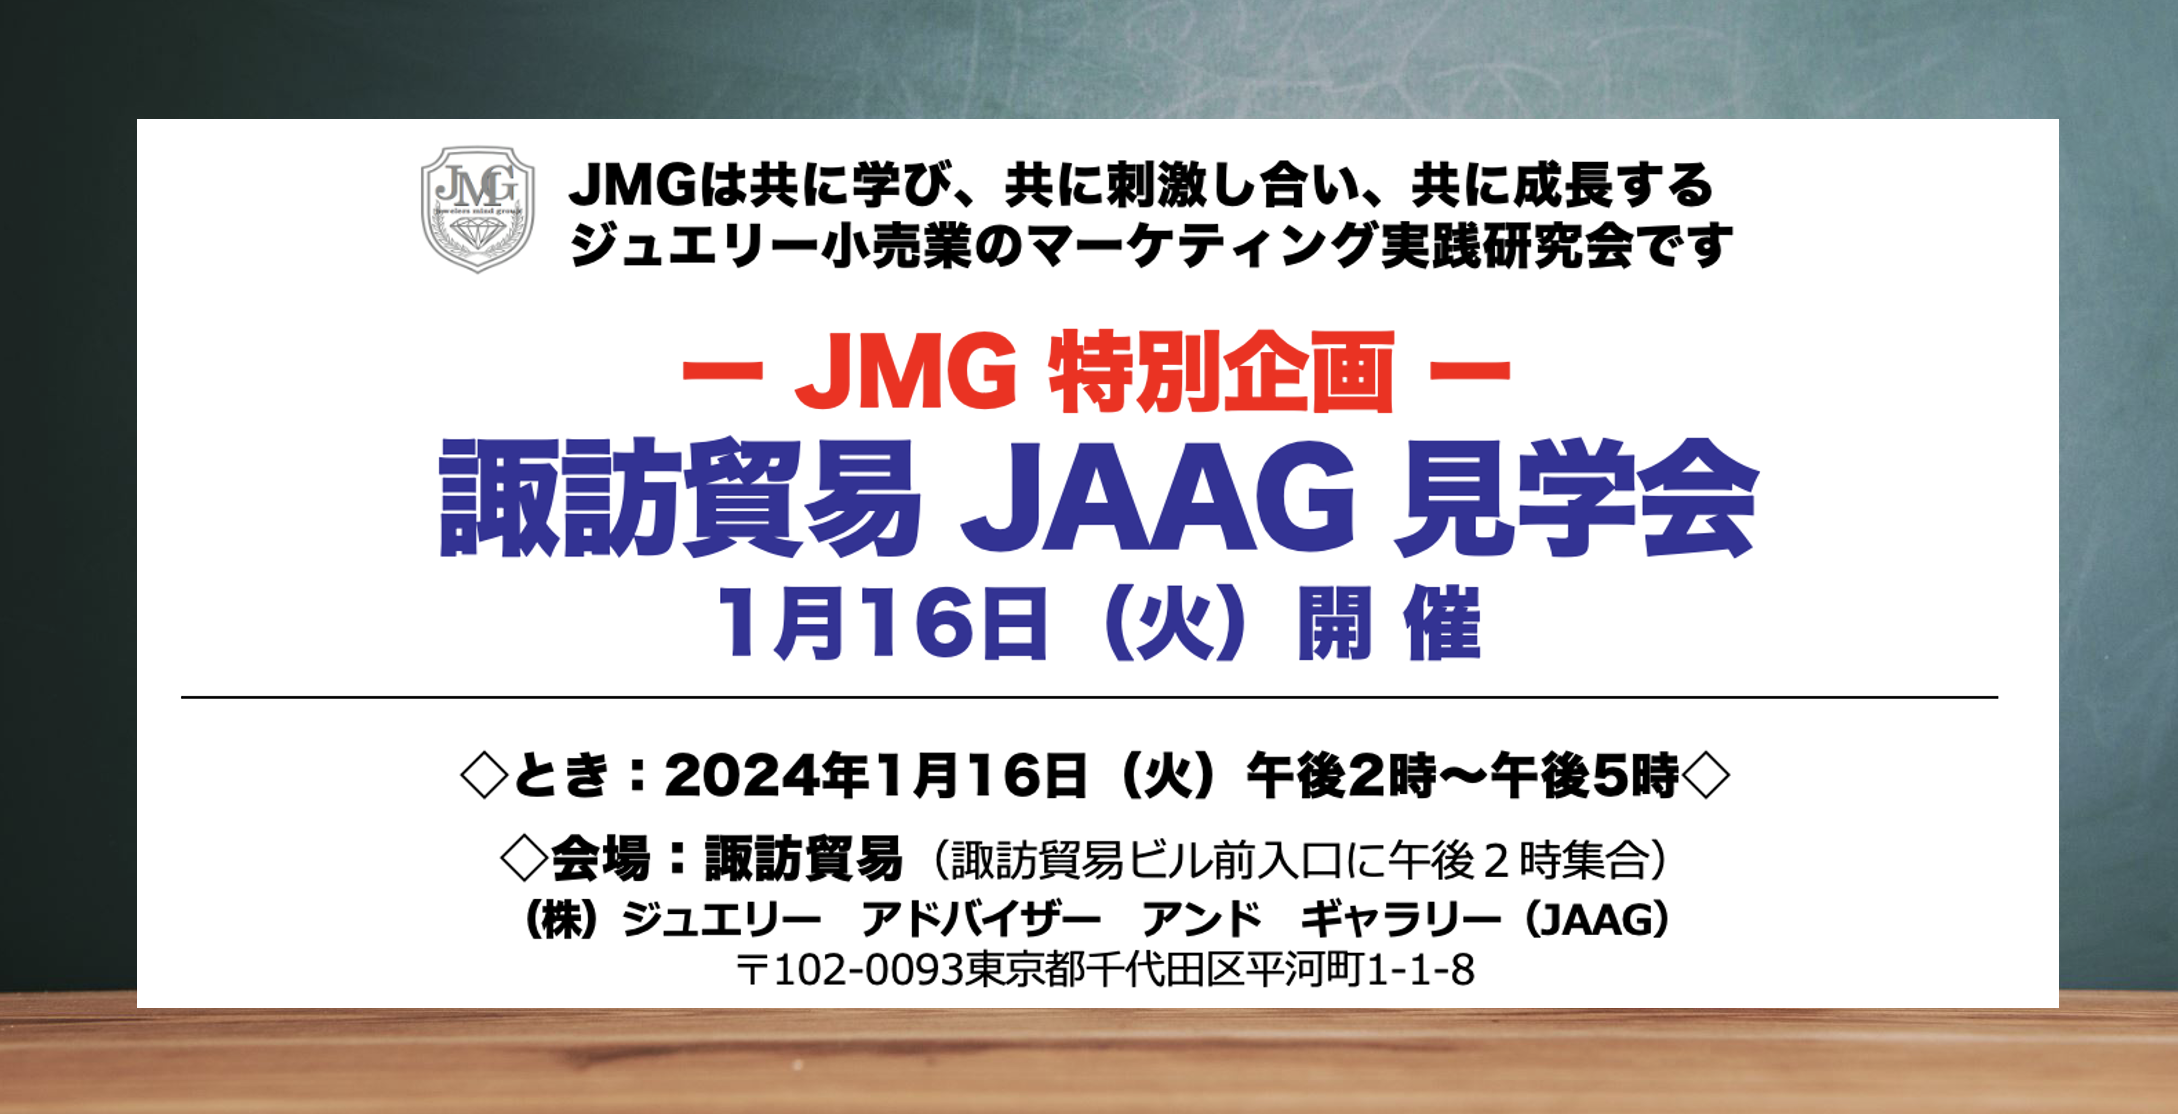 JMG 特別企画 ー 諏訪貿易 JAAG 見学会PR現代